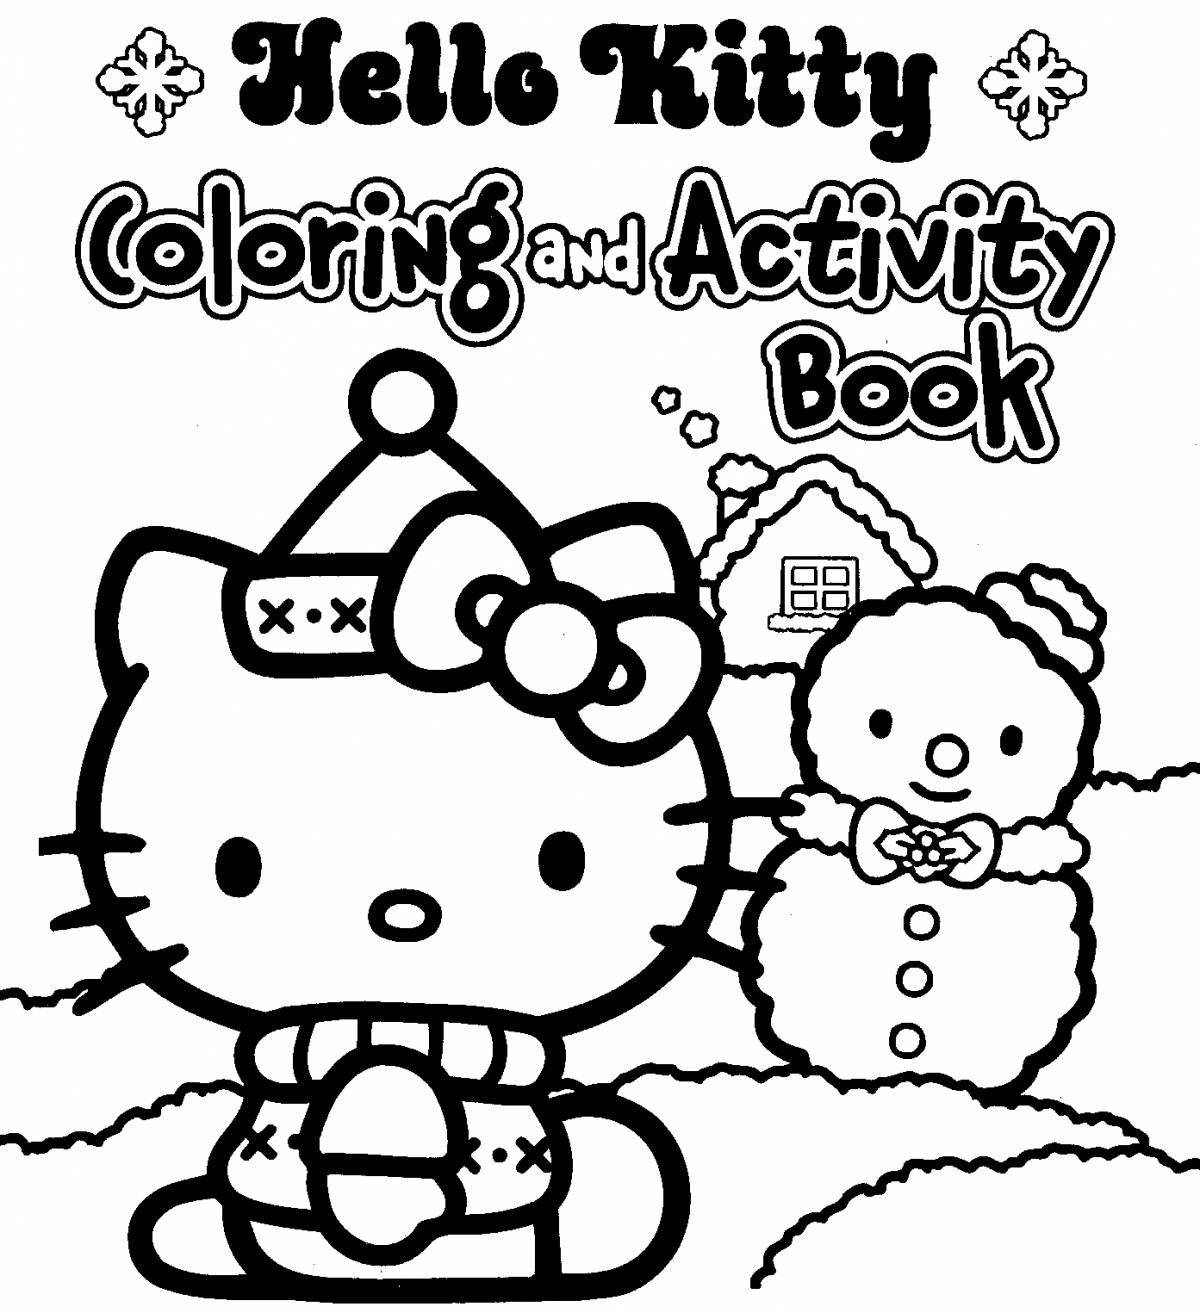 Hello kitty bunny coloring book